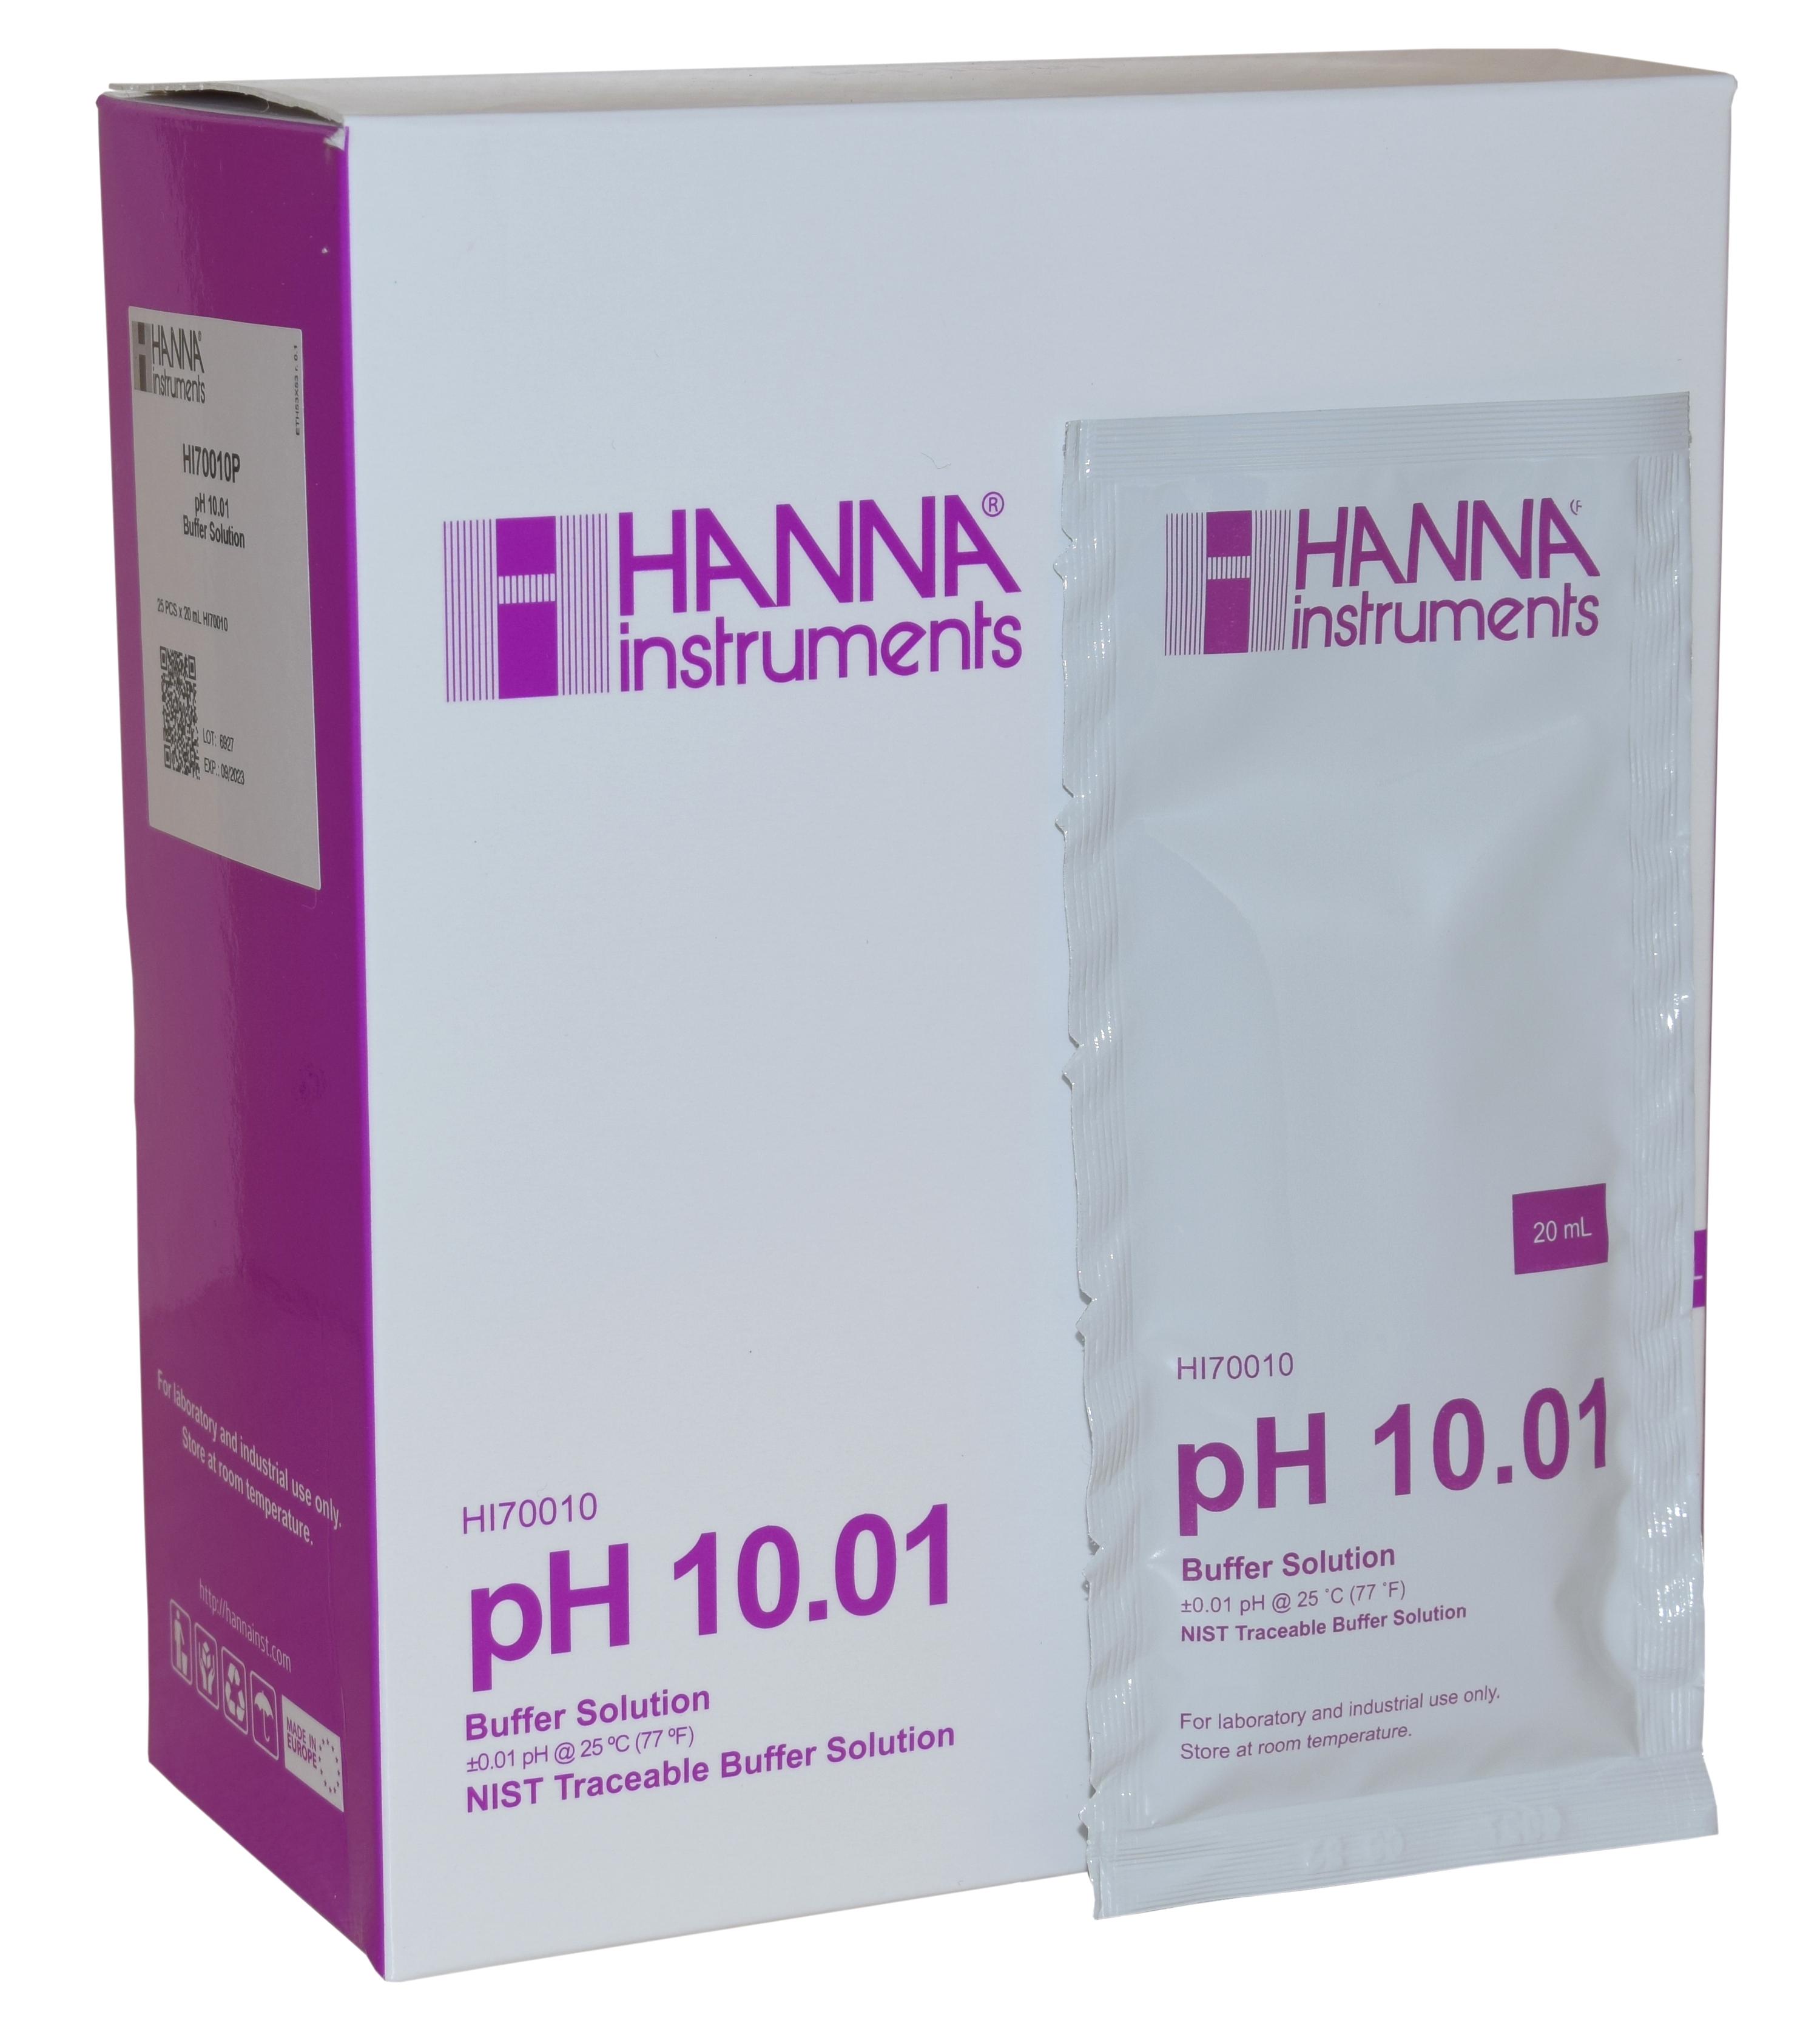 HANNA buffer solution pH 4.01, 25 x 20mL sachets (HI70004P)